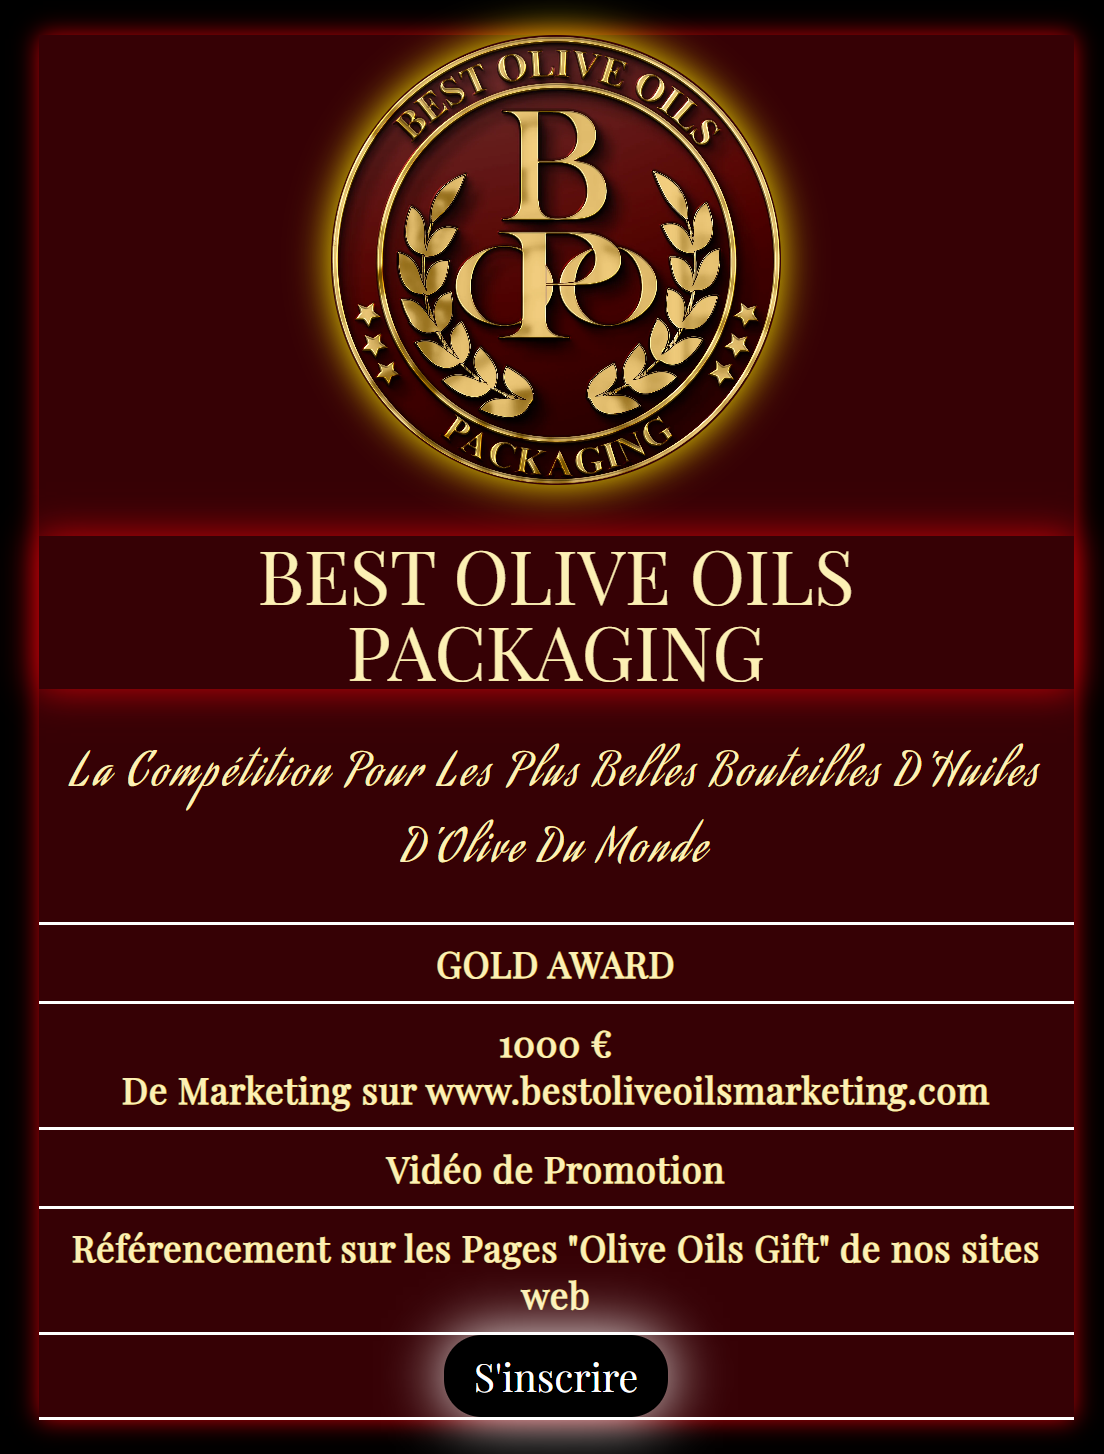 Best Olive Oils Packaging Competition Olive Oils Gift